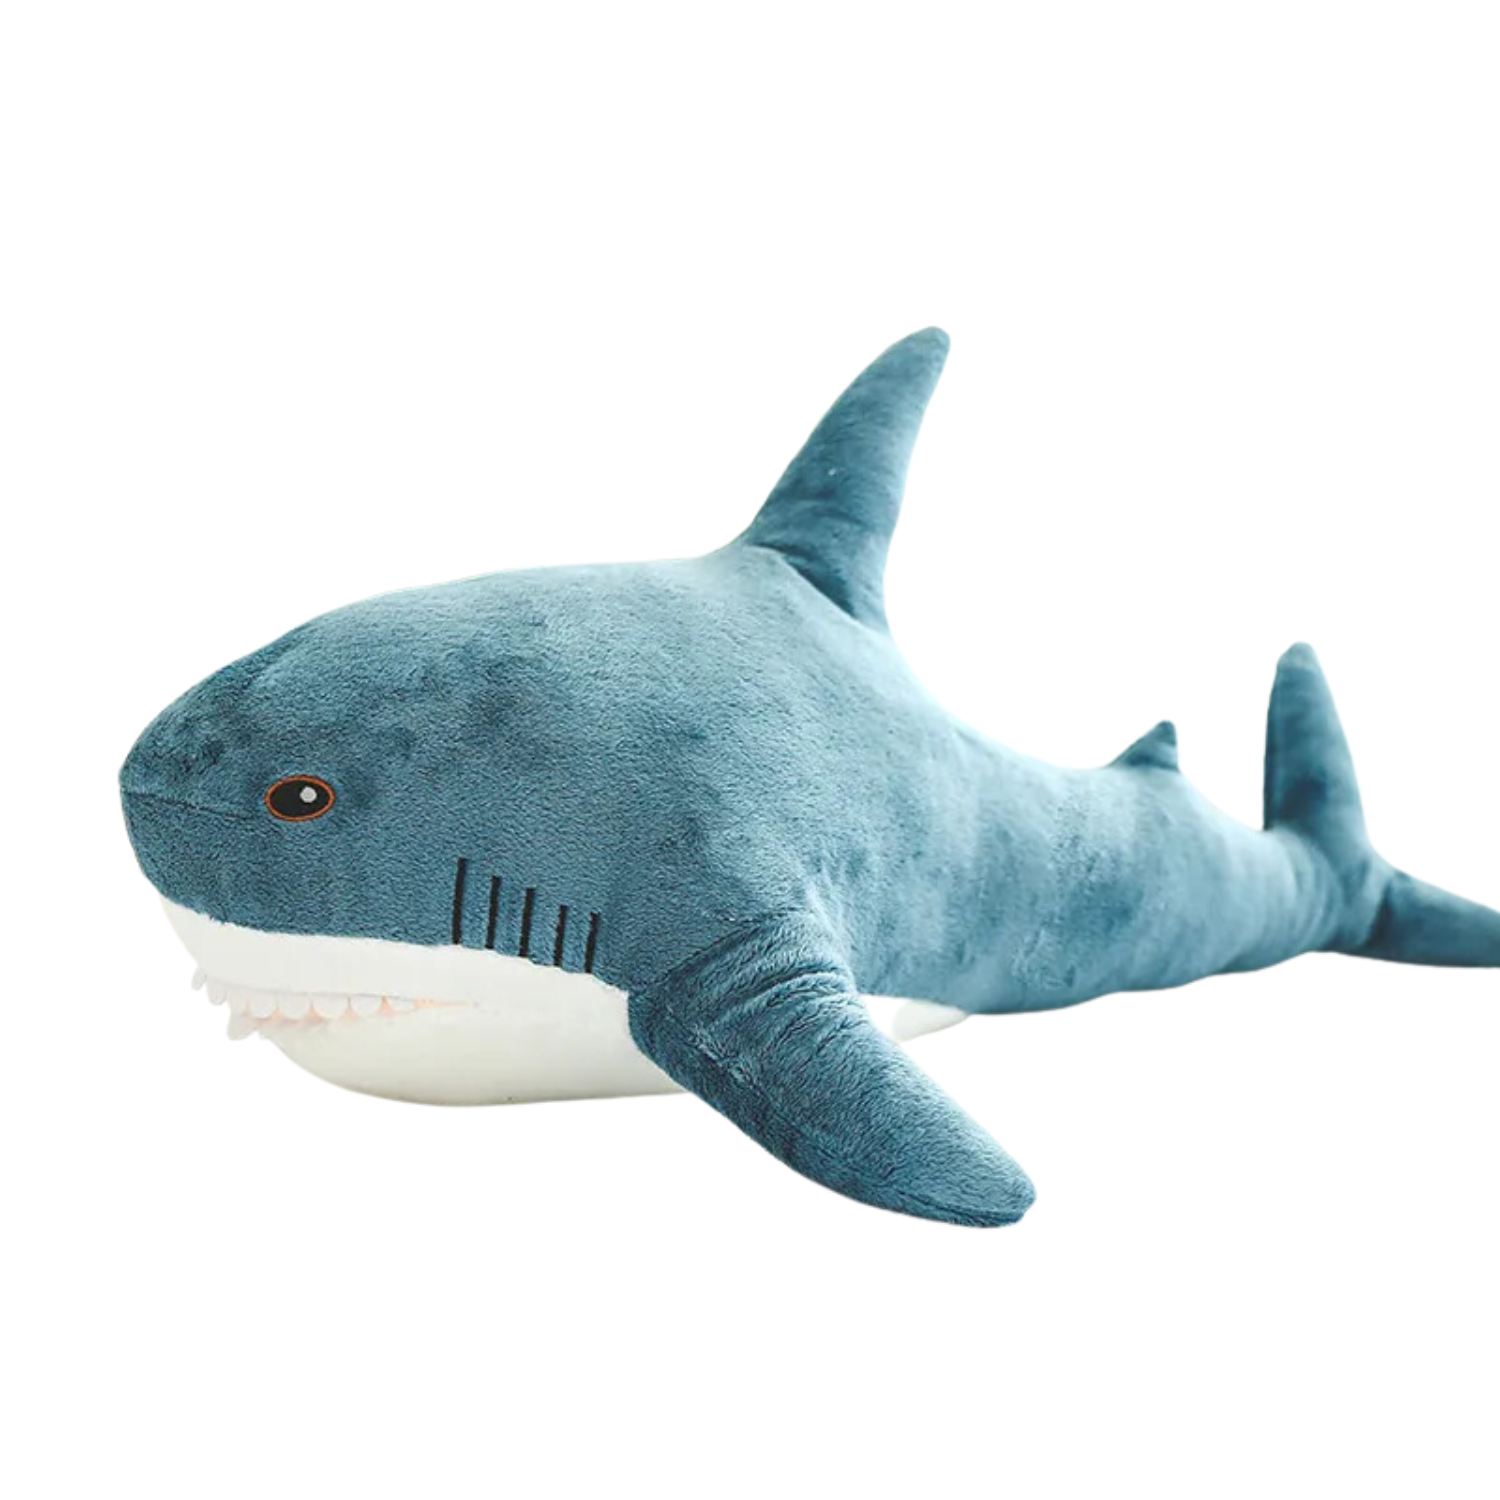 Мягкая игрушка-подушка обнимашка Nano Shot акула, 120 см мягкая плюшевая игрушка обнимашка nano shot хеллоу китти hello kitty 30 см